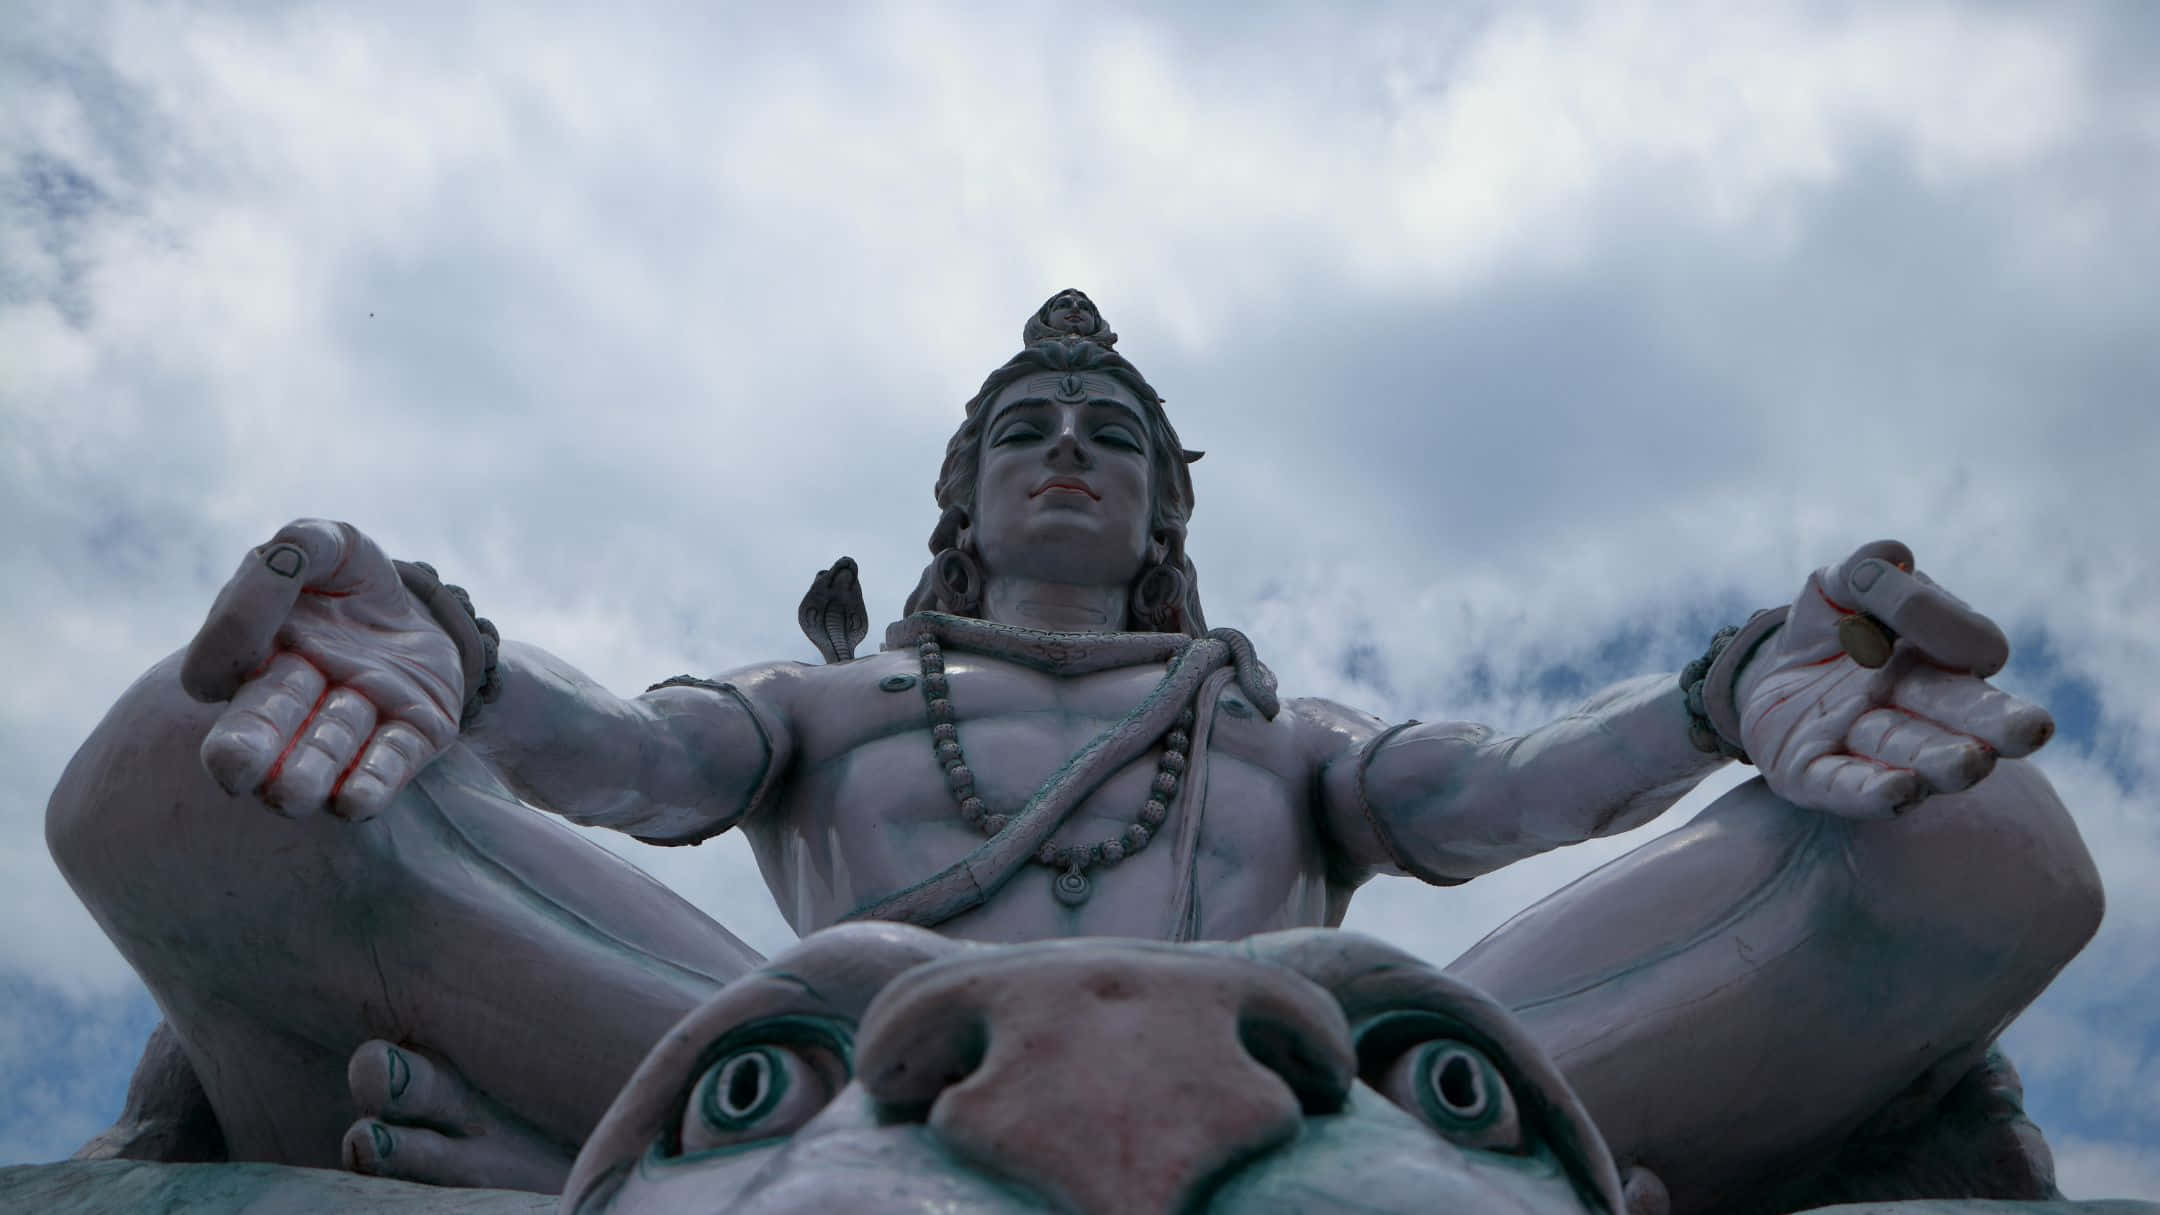 The Hindu God Shiva Praying in This Thoughtful Pose